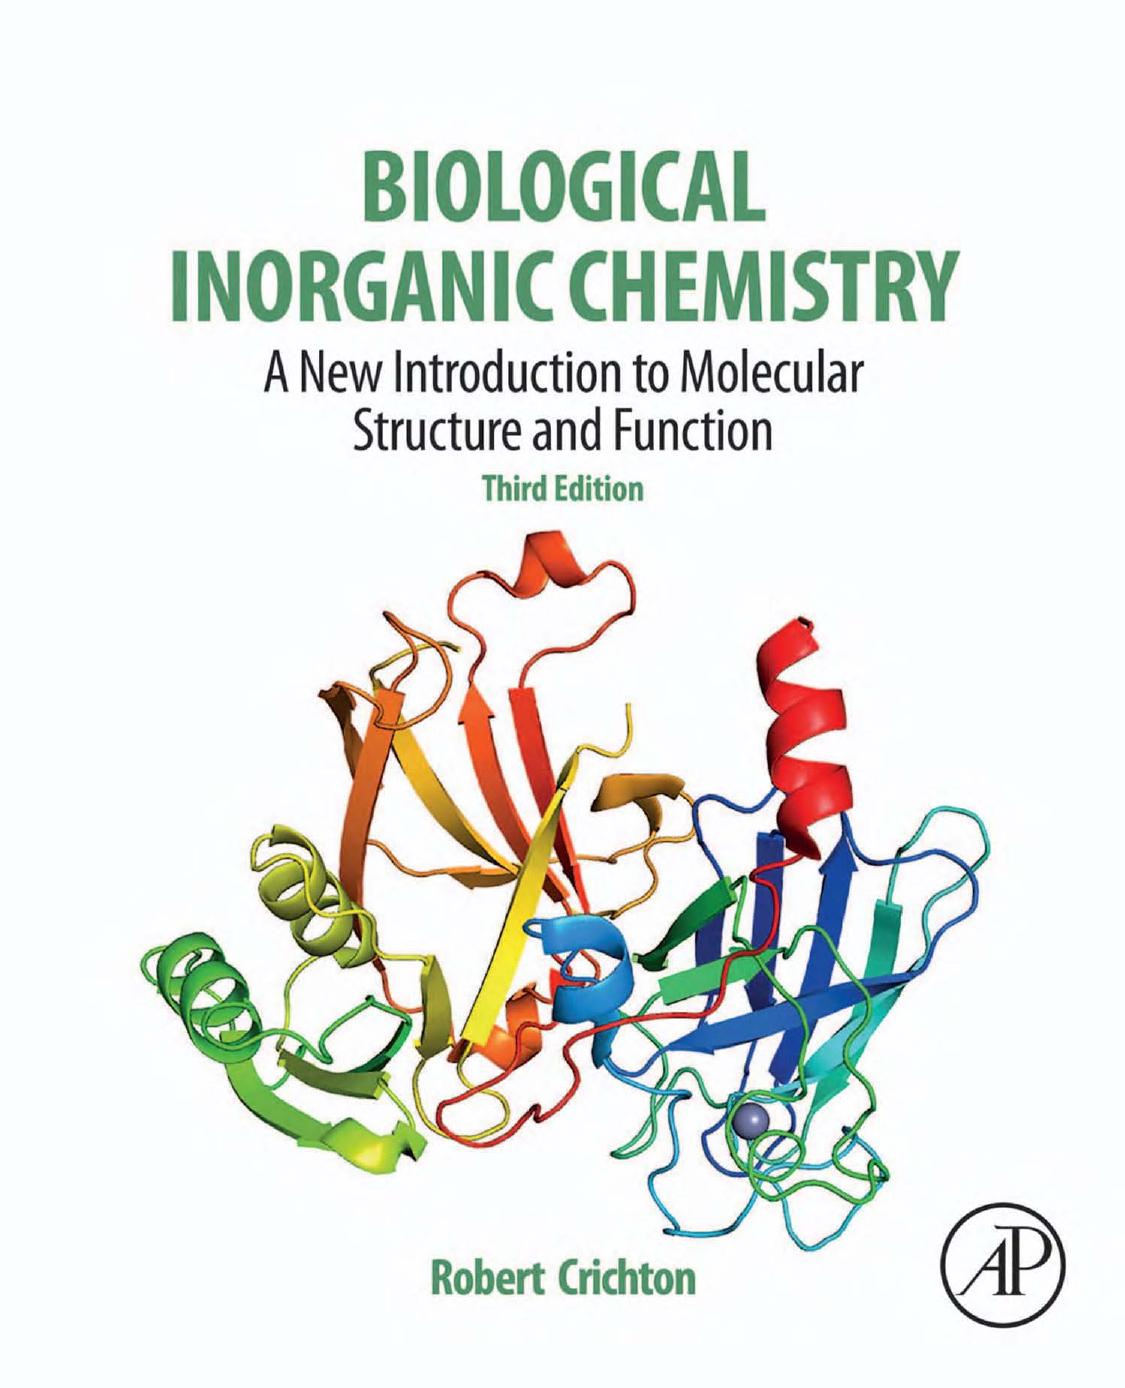 Biological Inorganic Chemistry (Third Edition)